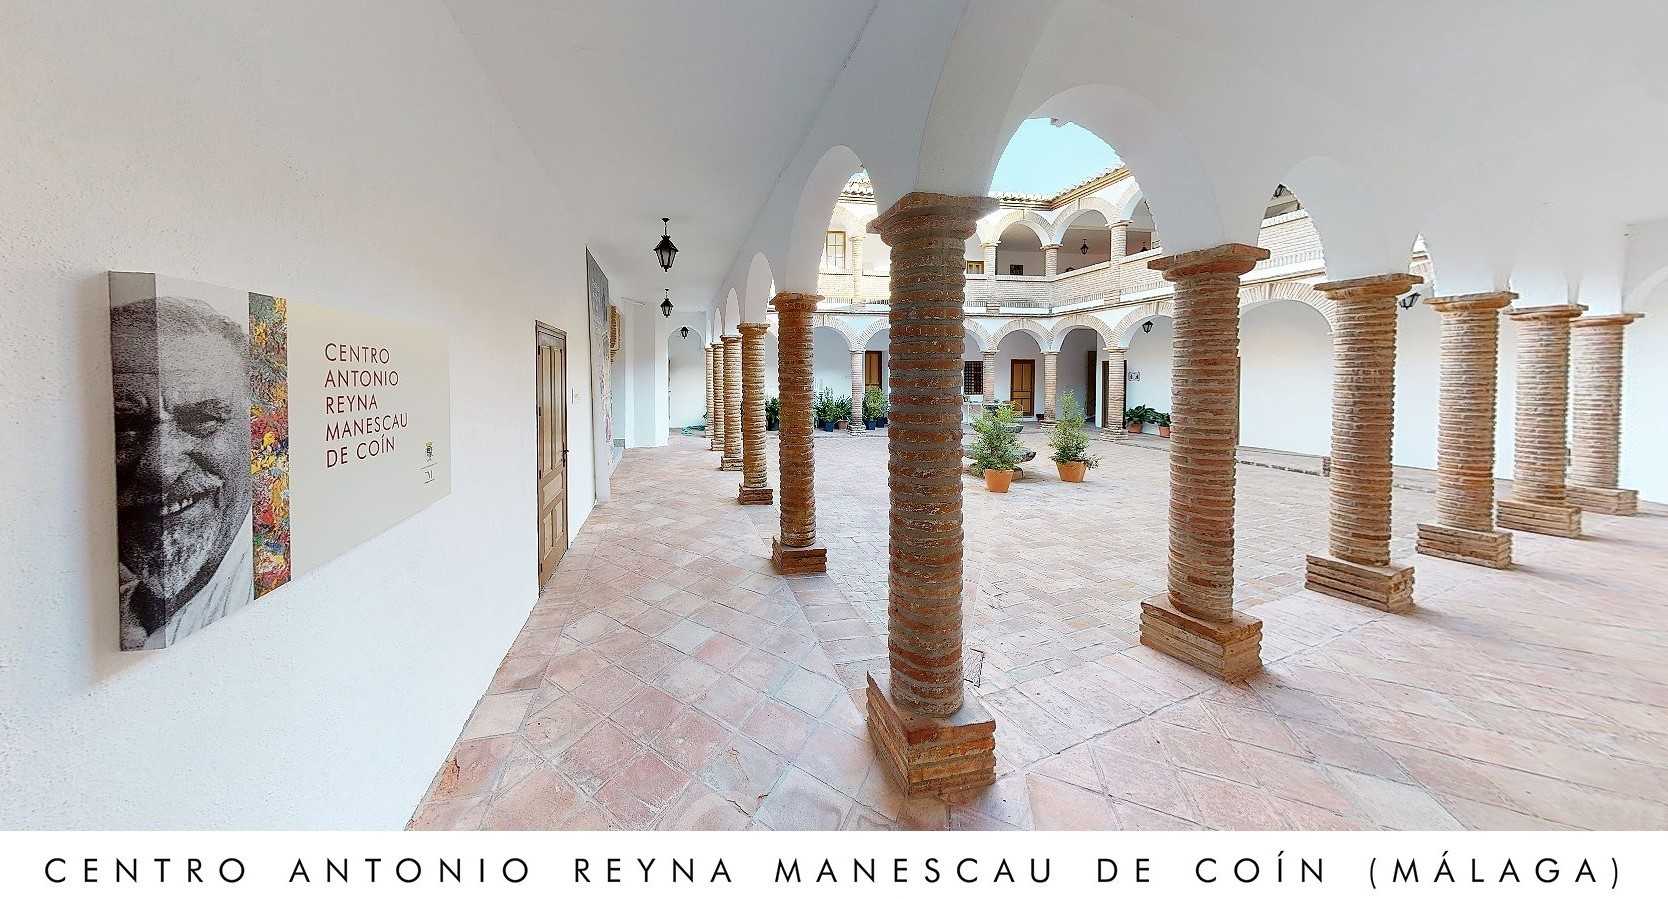 Centre Antonio Reyna Manescau